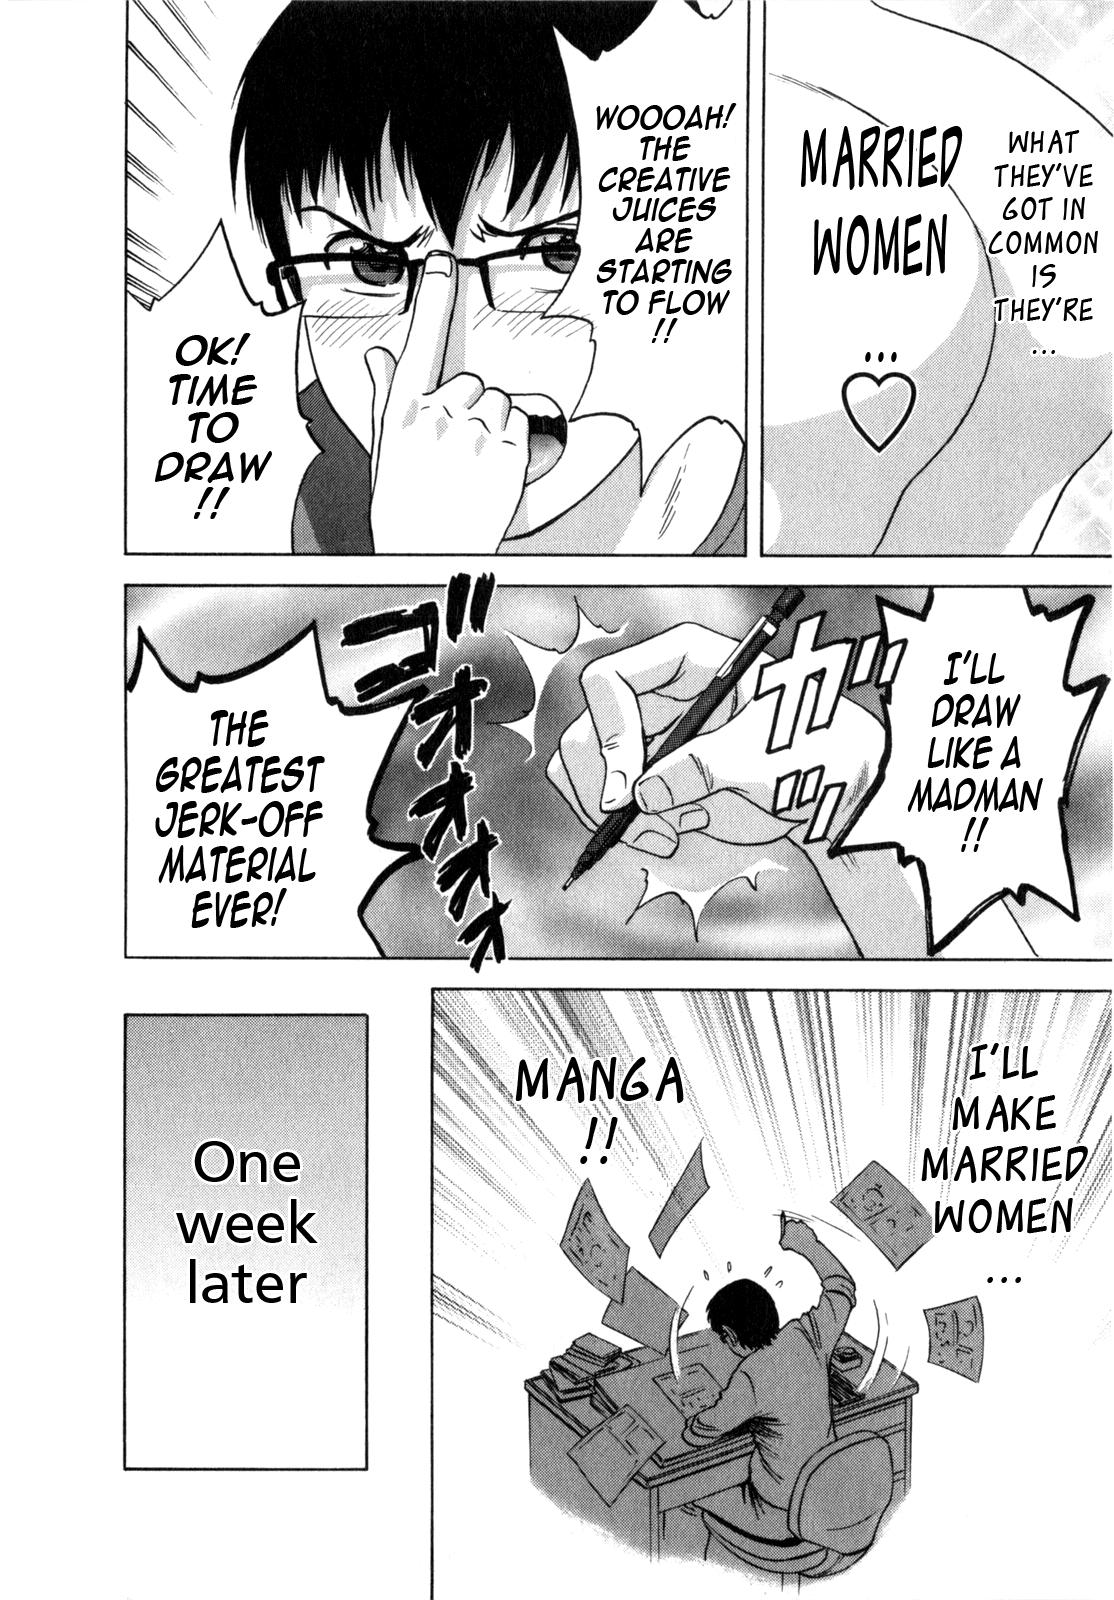 [Hidemaru] Life with Married Women Just Like a Manga 1 - Ch. 1-5 [English] {Tadanohito} 69